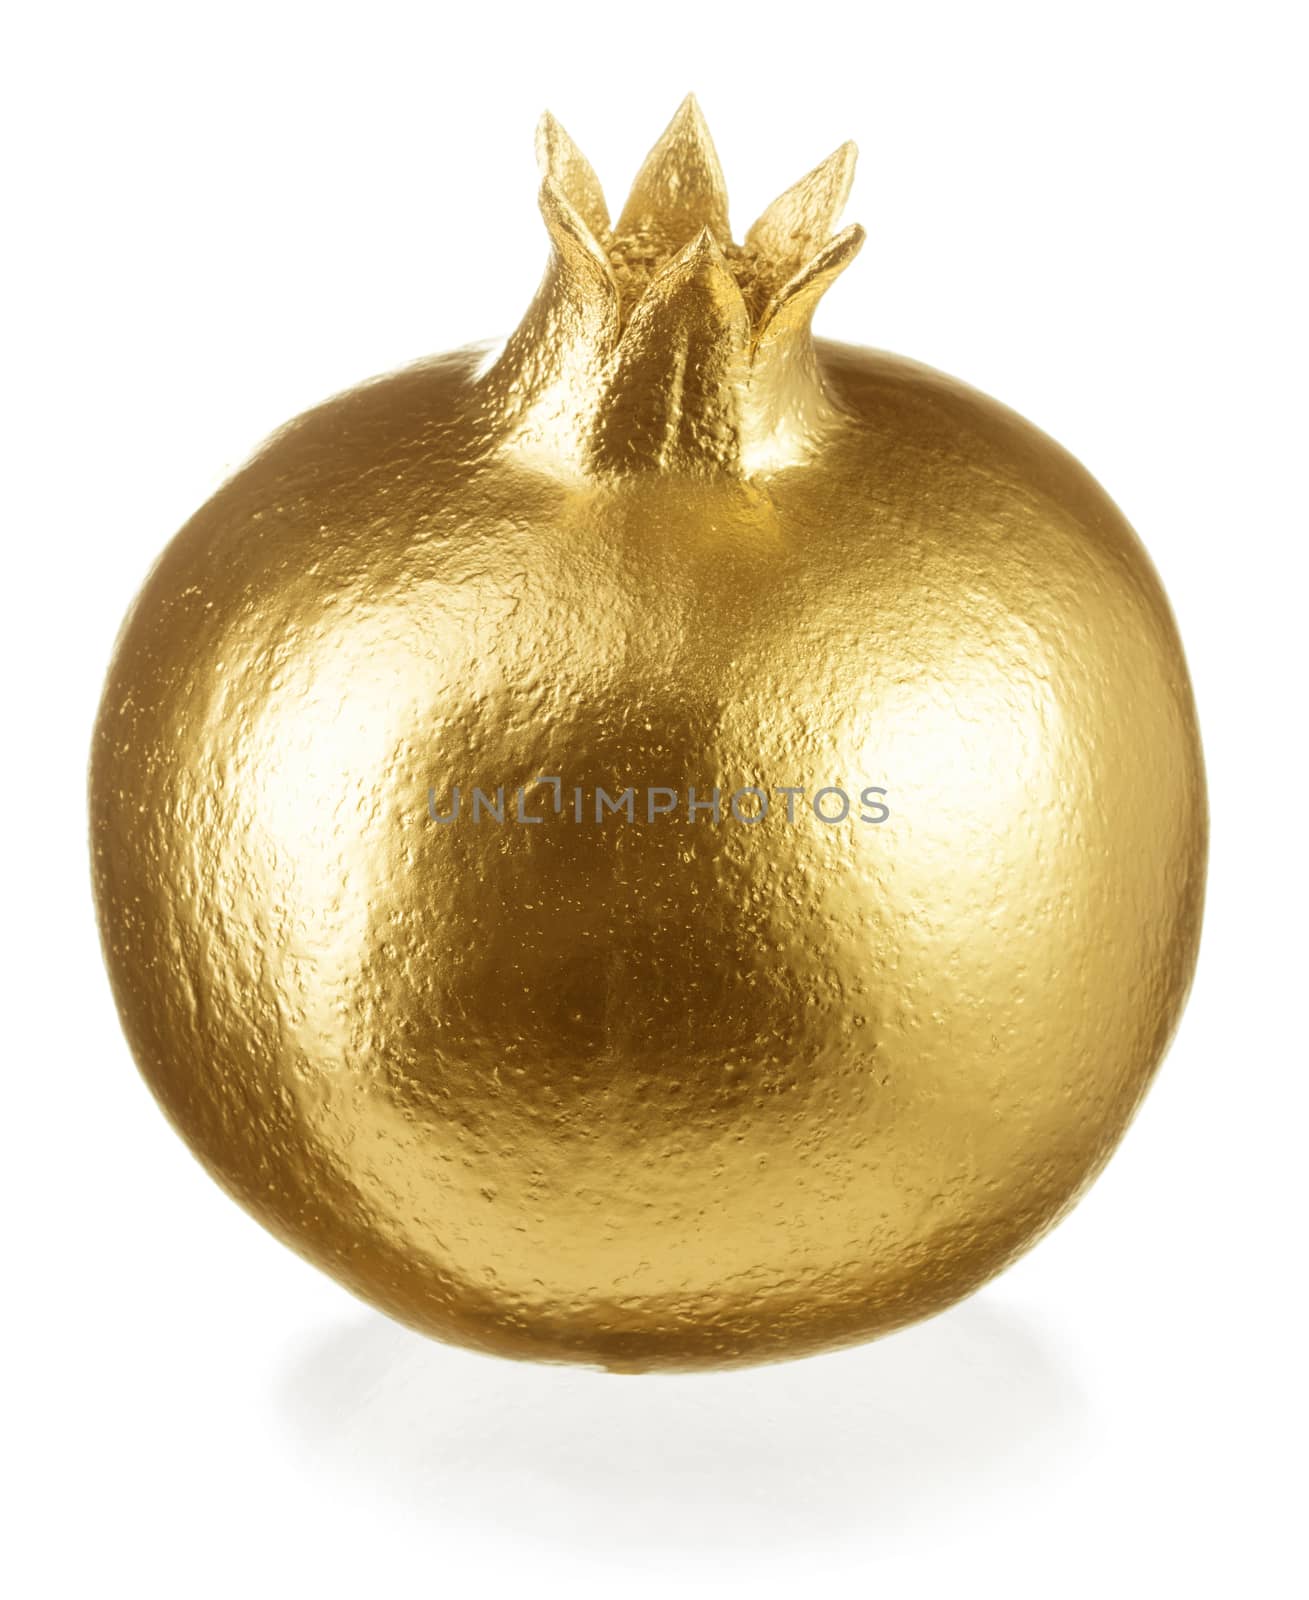 Whole gold pomegranate isolated on white